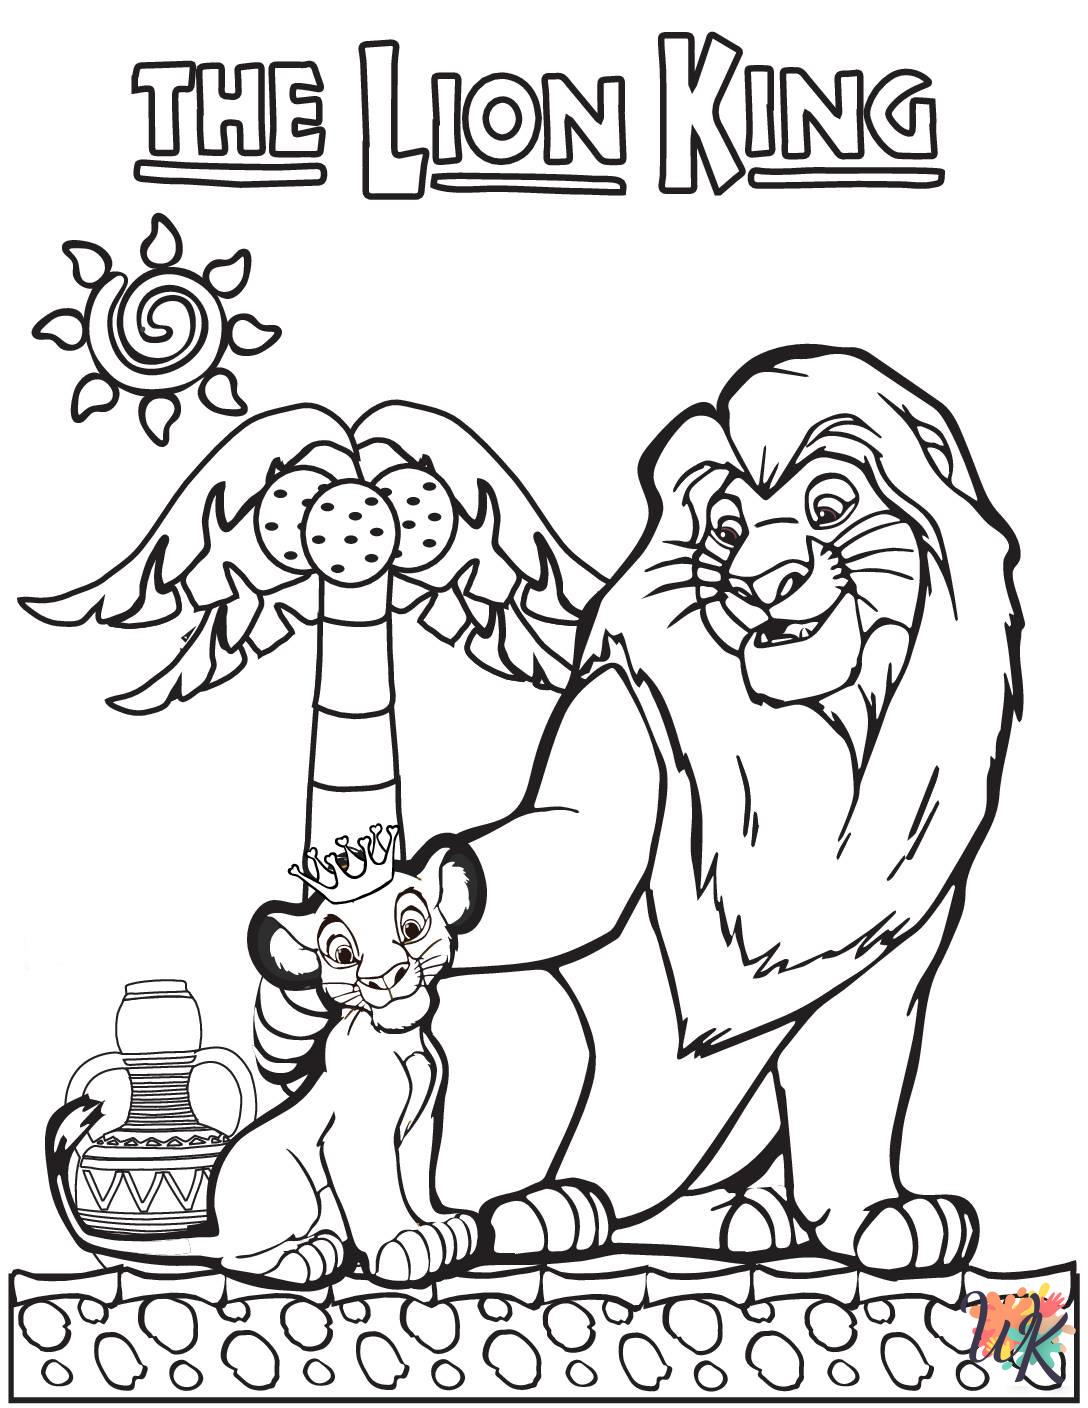 Lion King coloring pages pdf